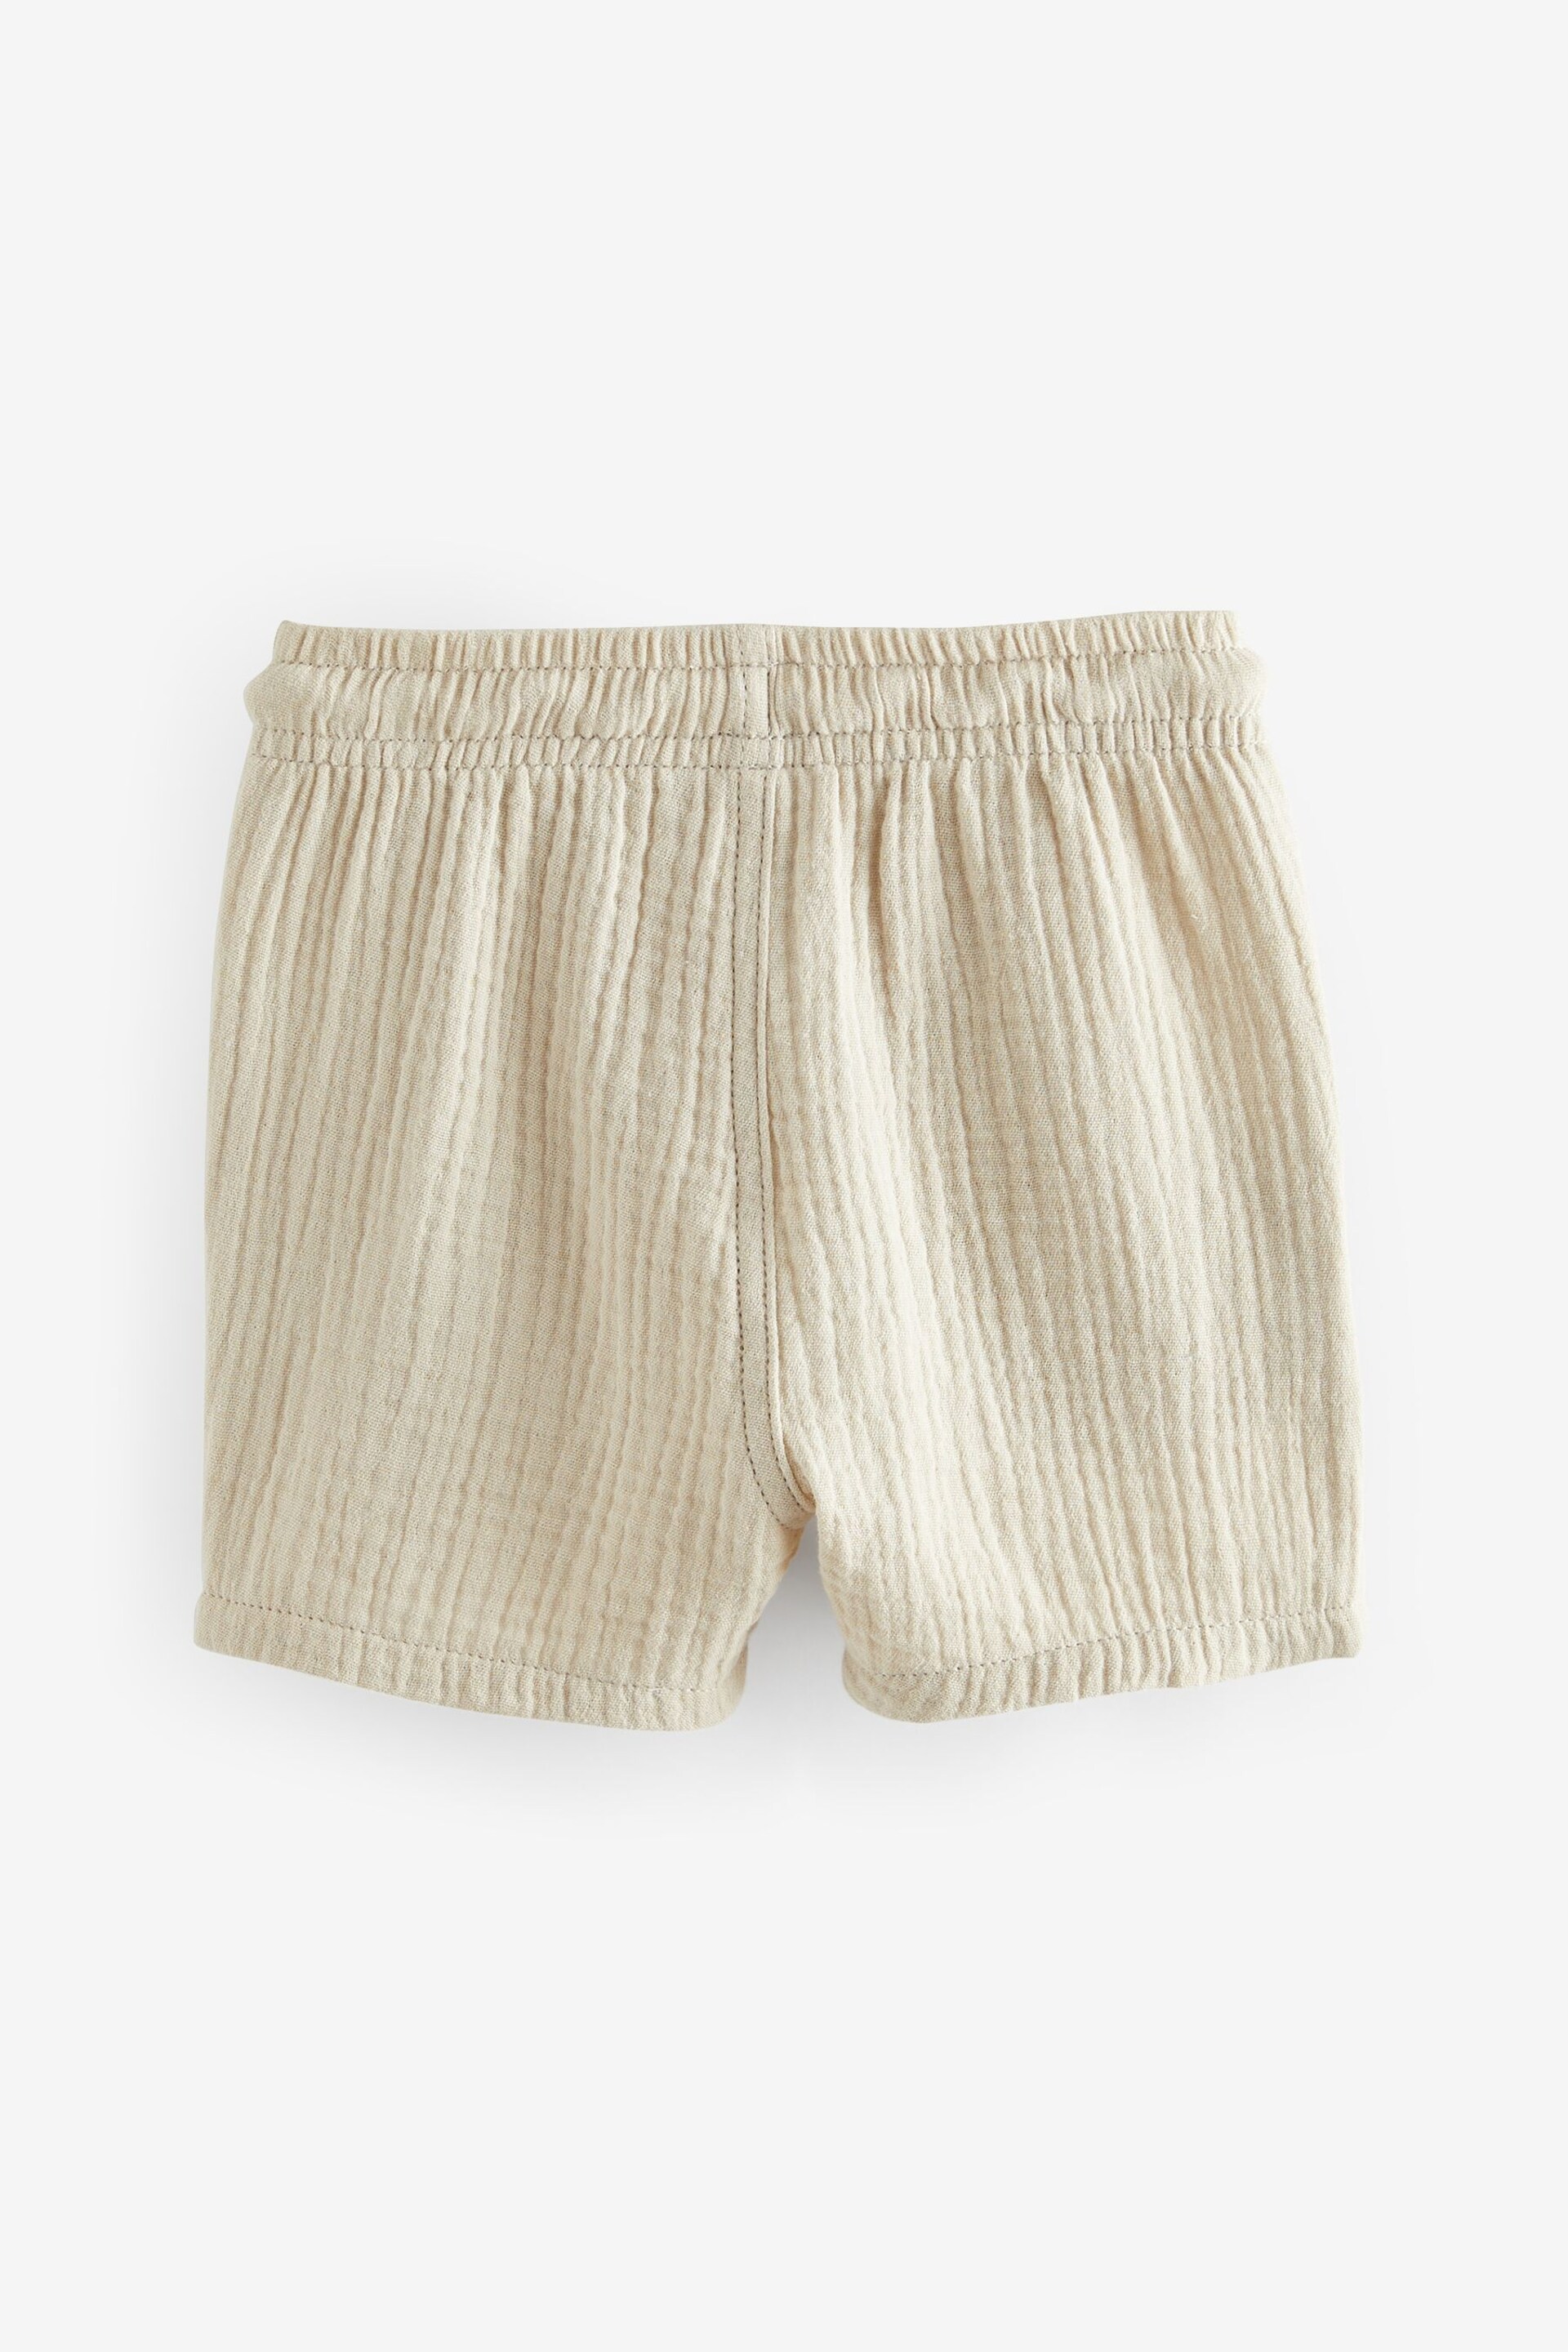 Ecru Cream Soft Textured Cotton Shorts (3mths-7yrs) - Image 4 of 5